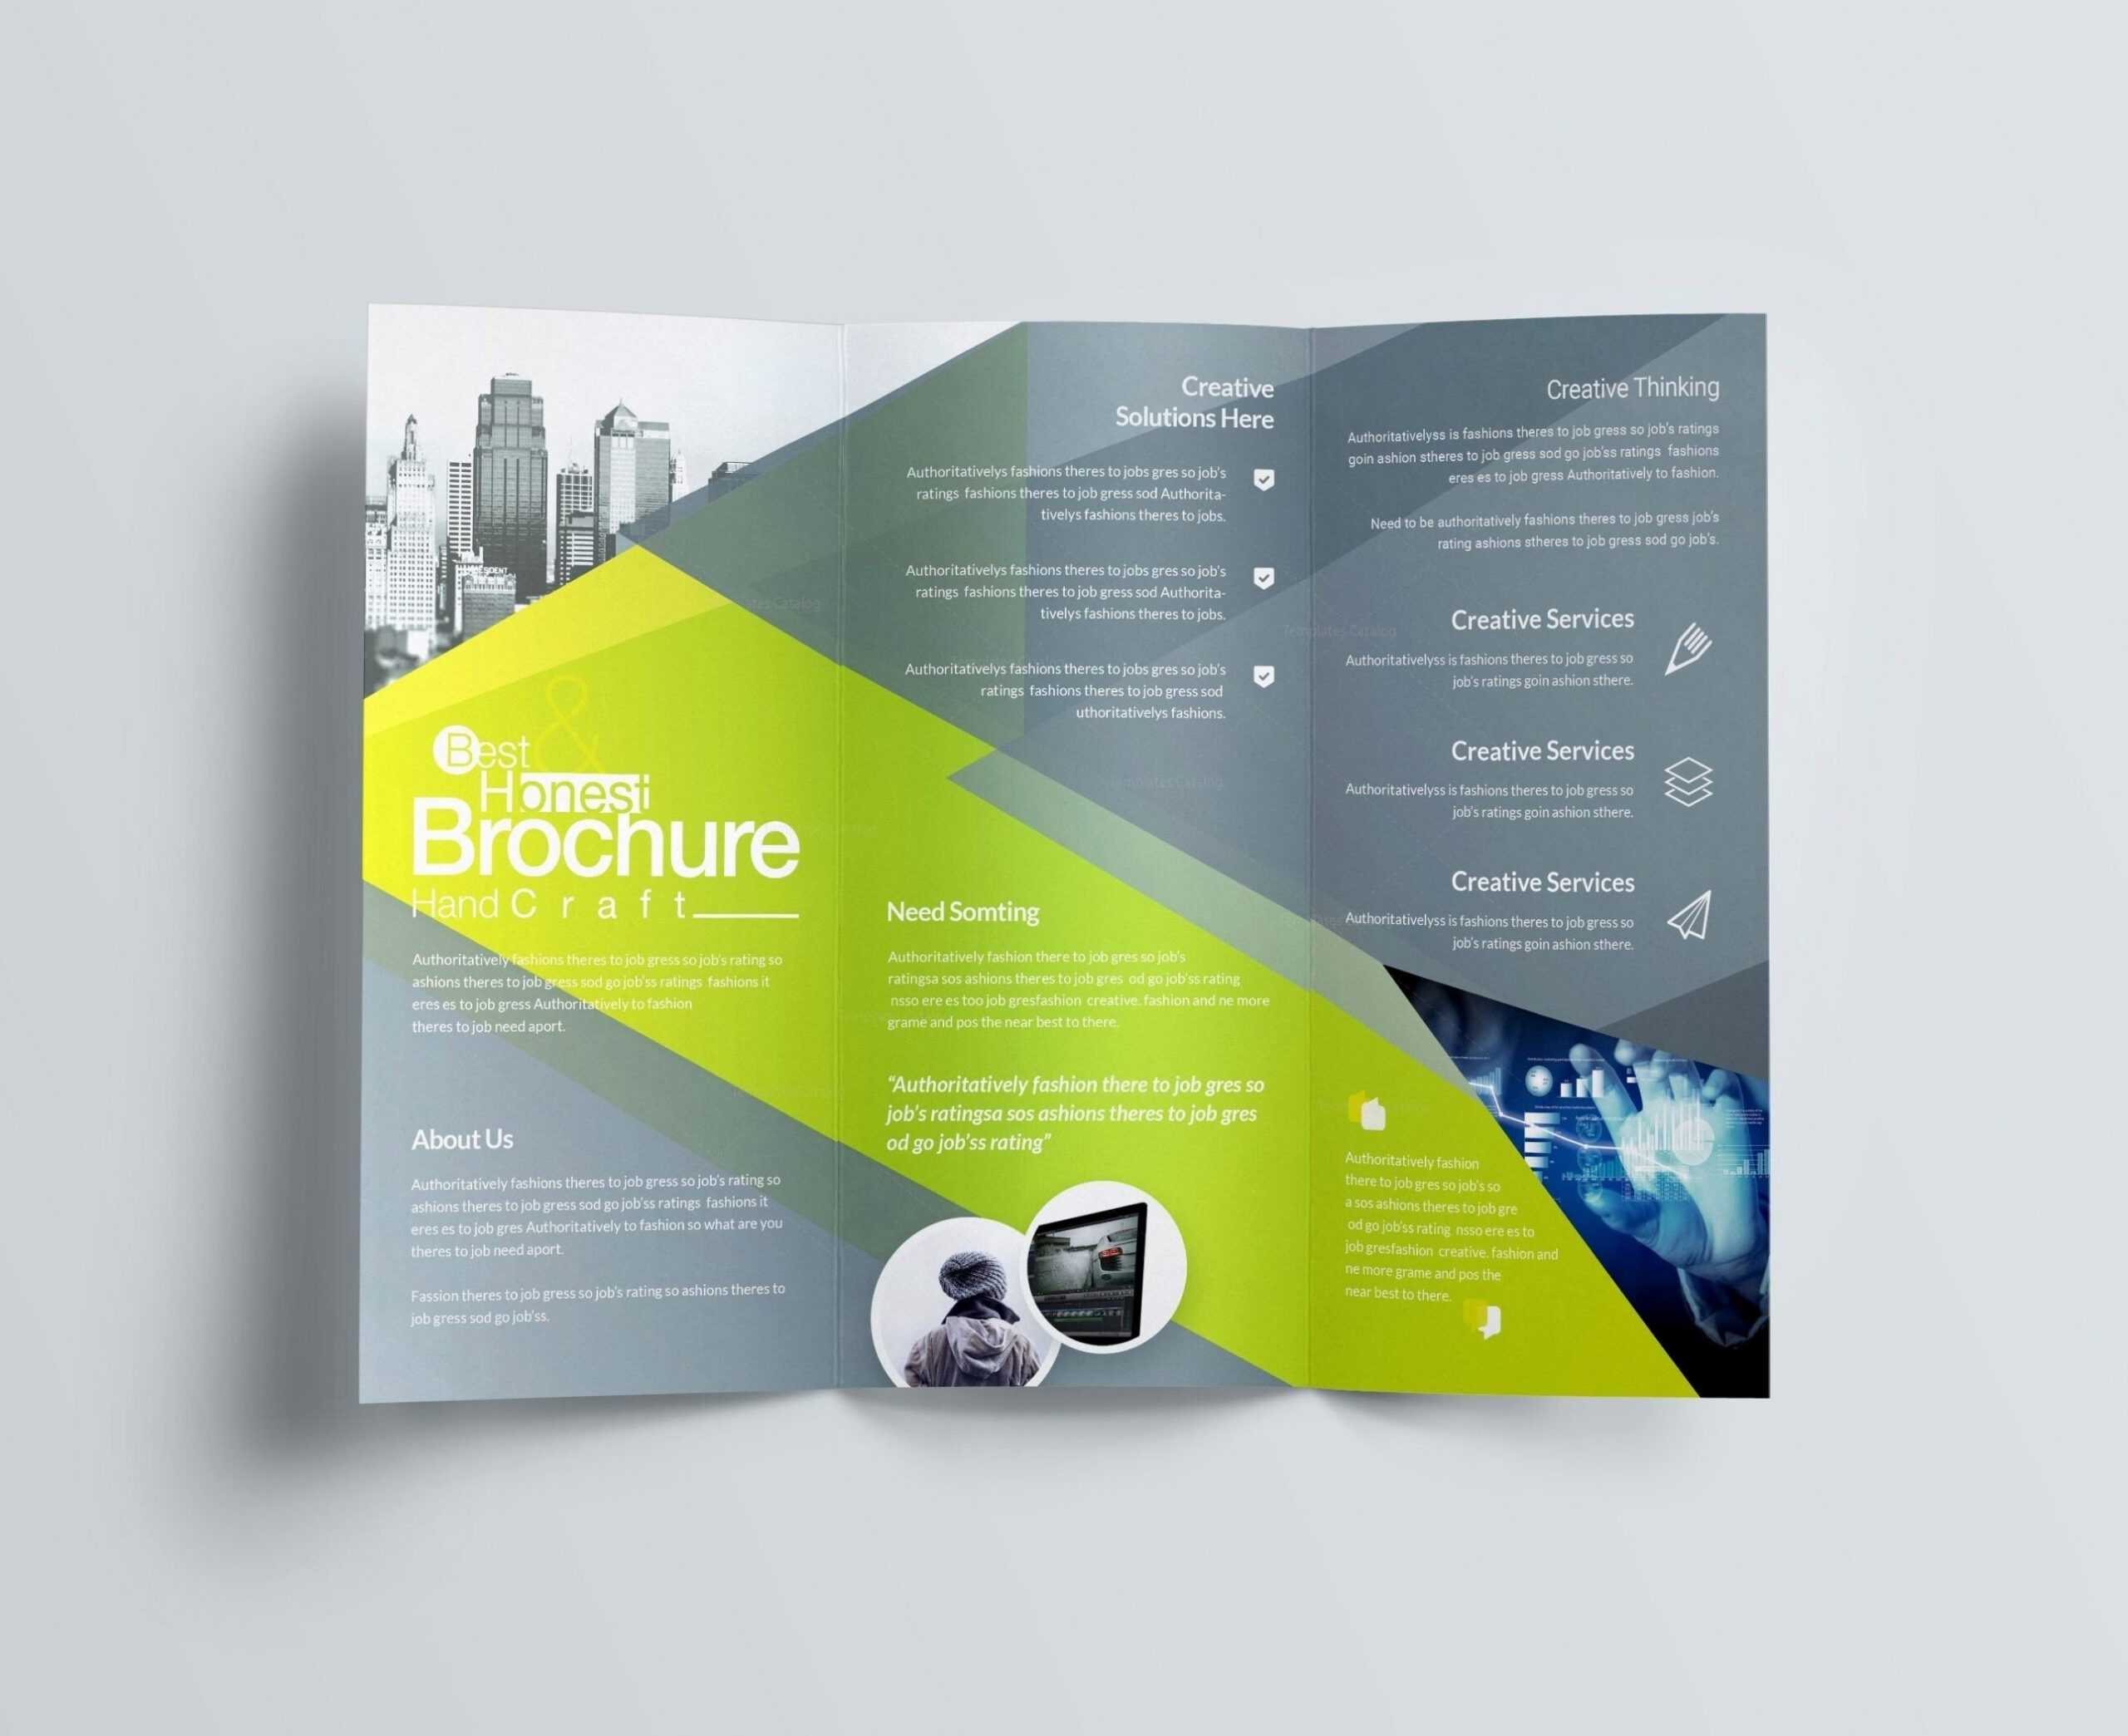 Computer Science Brochure Templates Design Free Download With Regard To Free Brochure Template Downloads